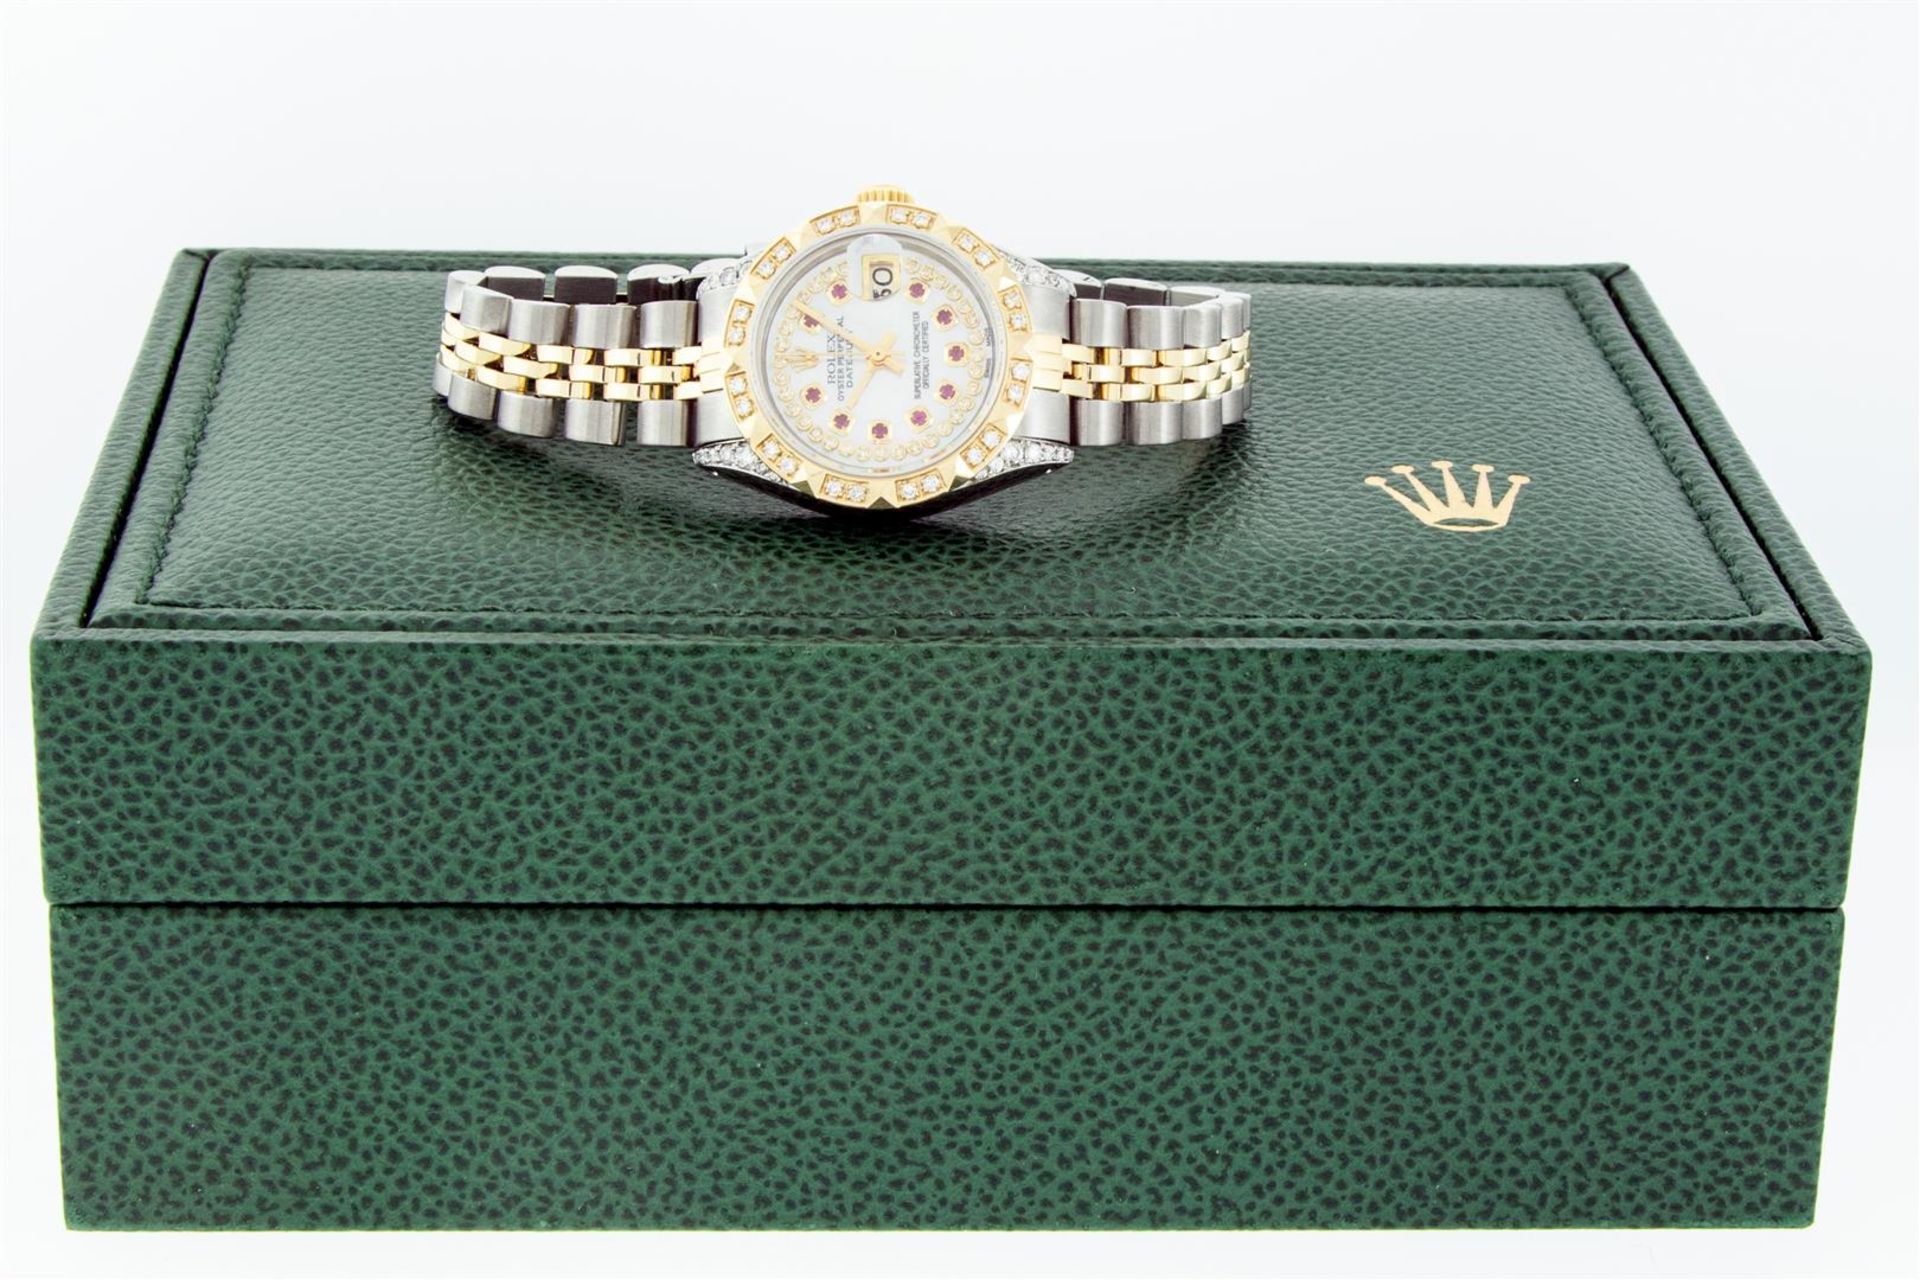 Rolex Ladies 2 Tone MOP Ruby & Pyramid Diamond Datejust Wriswatch With Rolex Box - Image 7 of 9